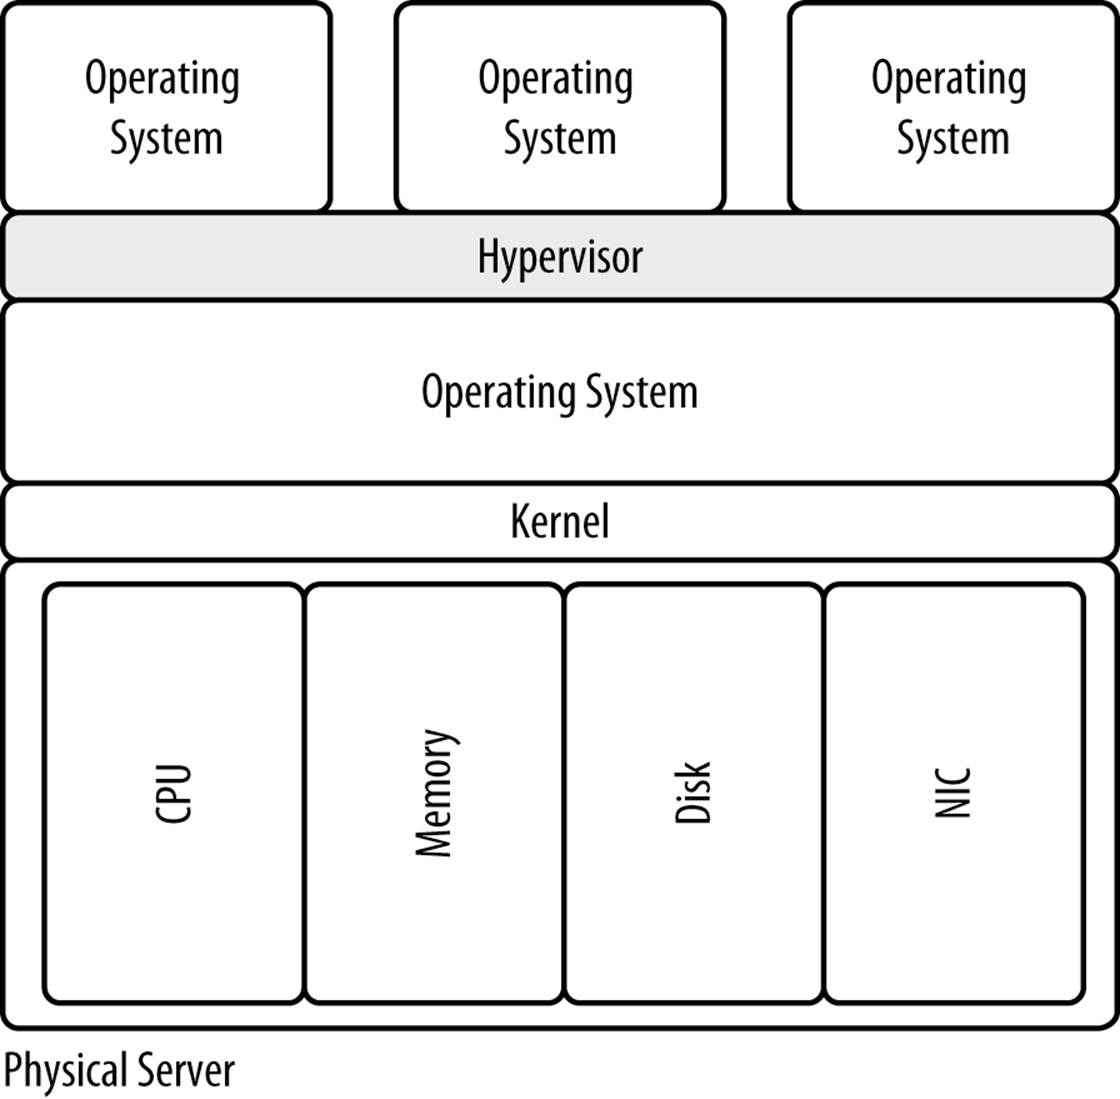 Operating system virtualization